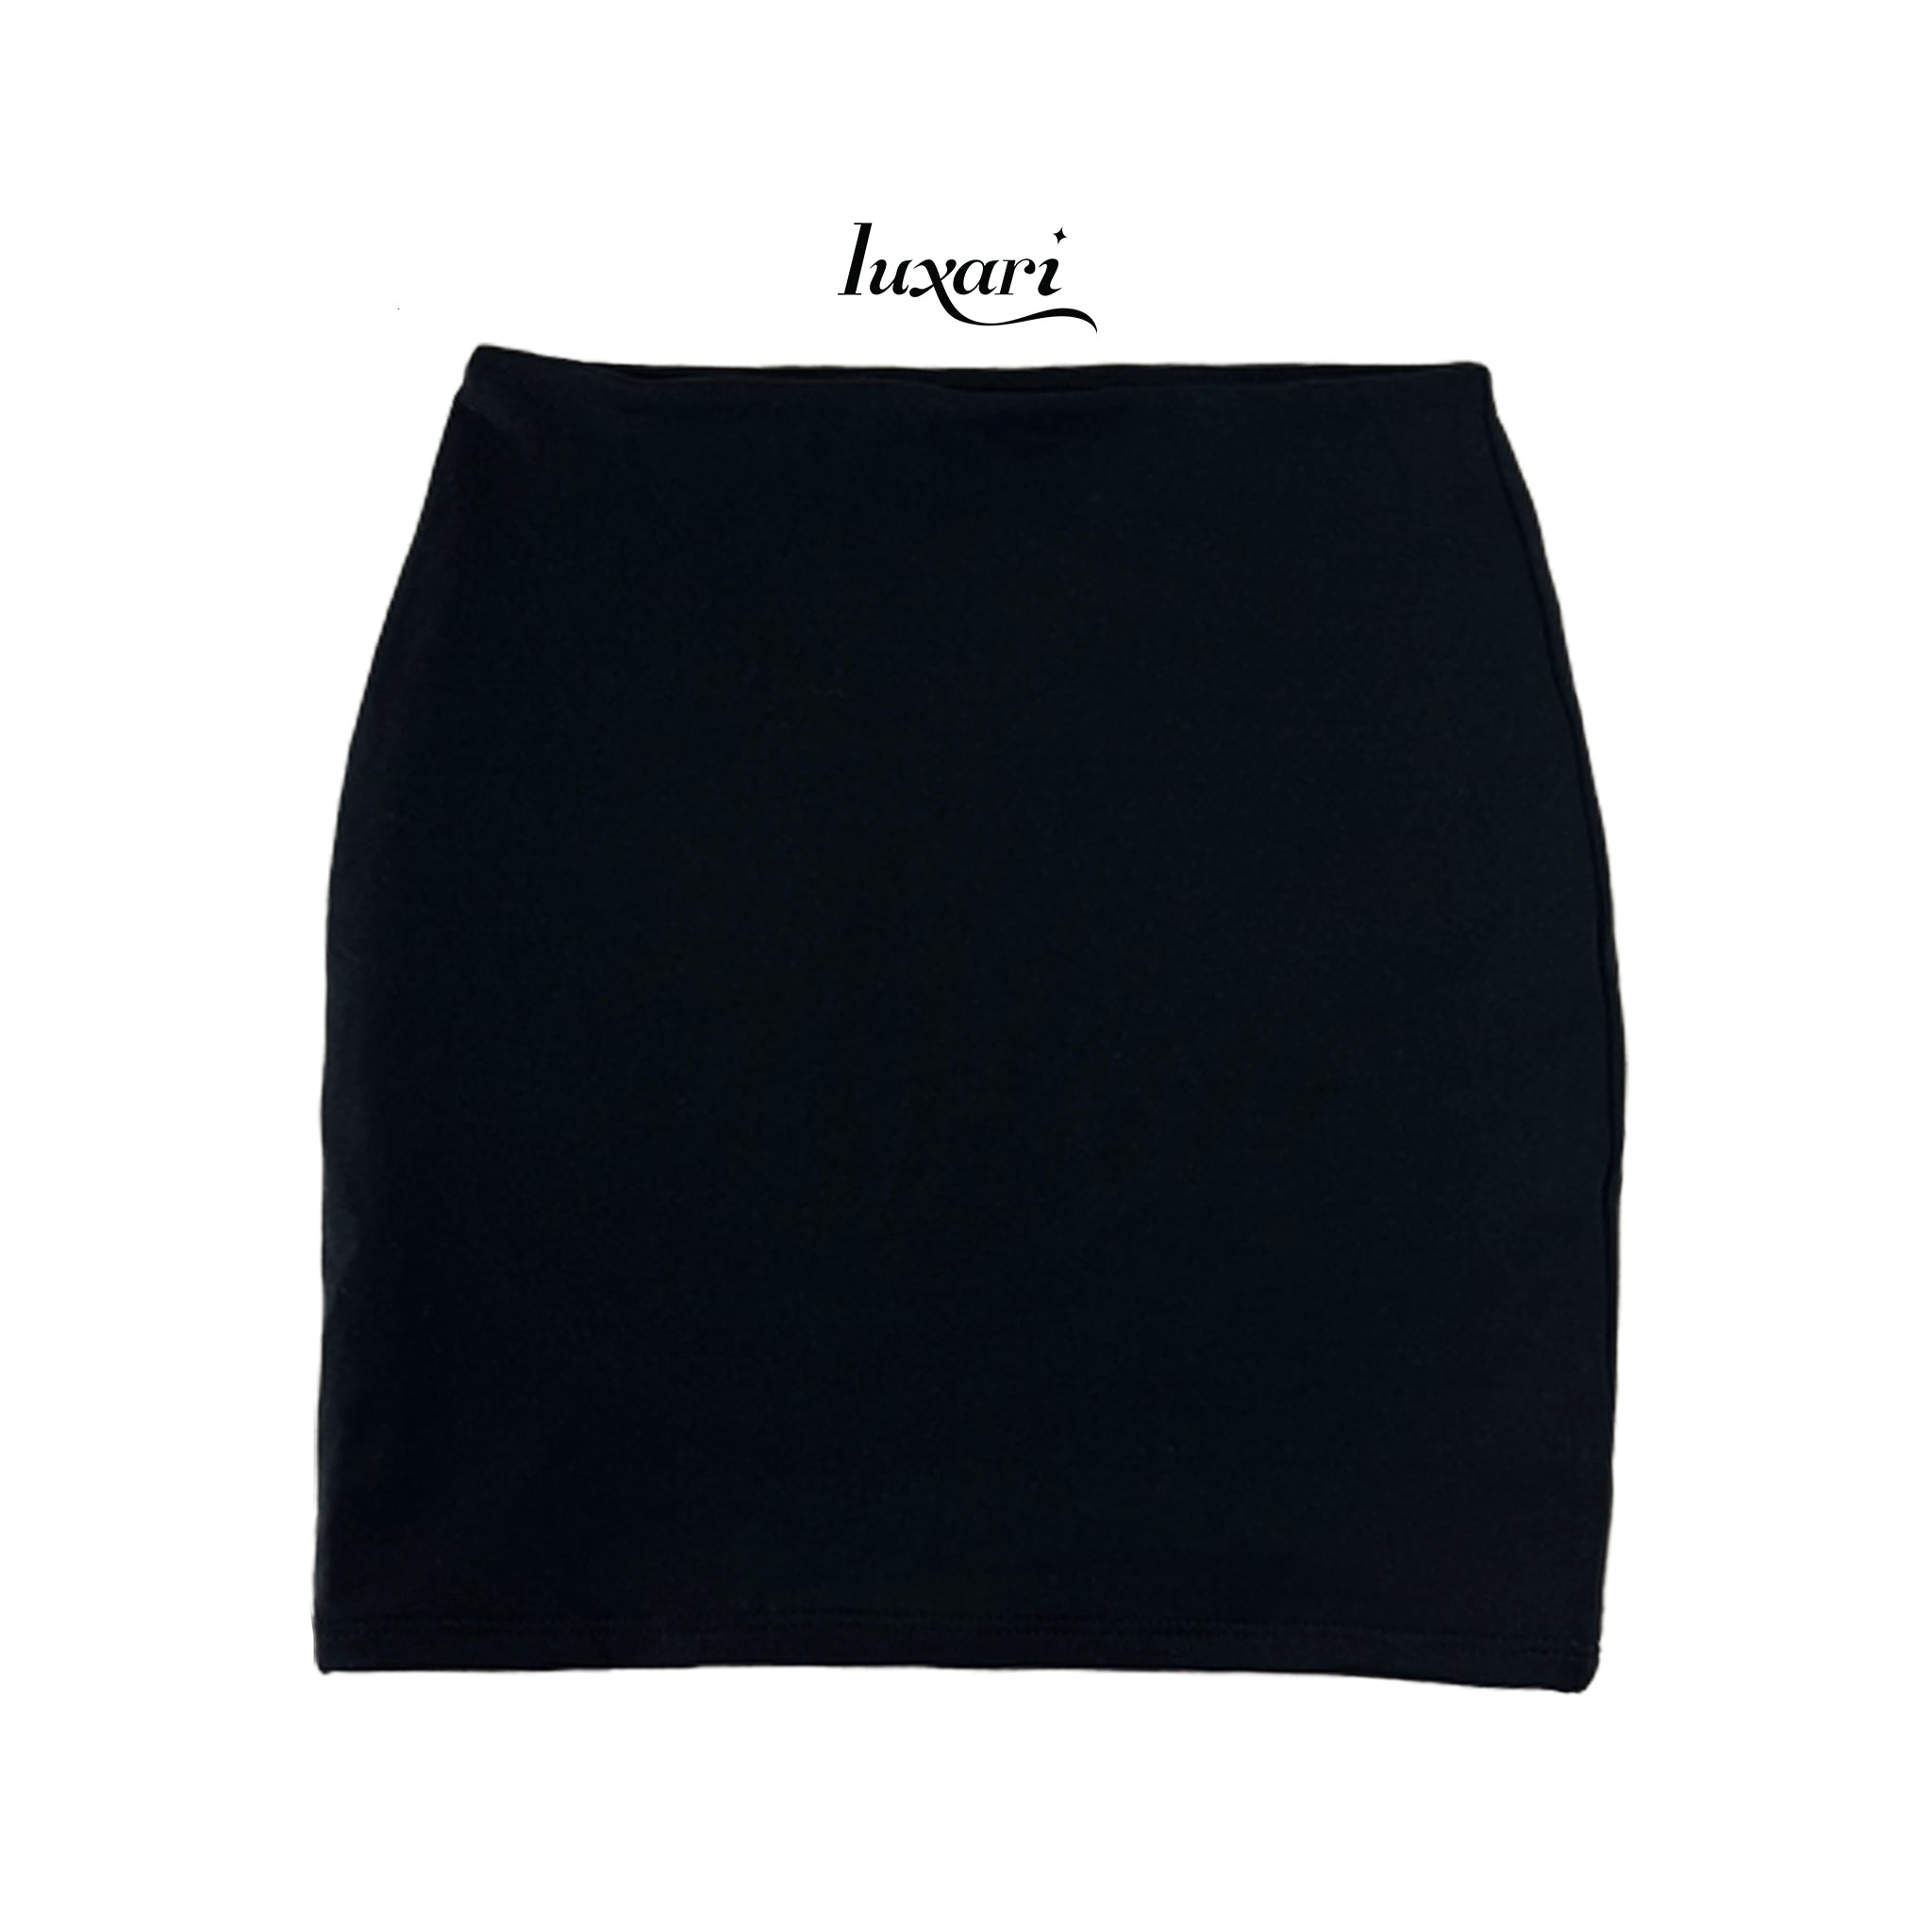 Luxari Mini Skirt, Black